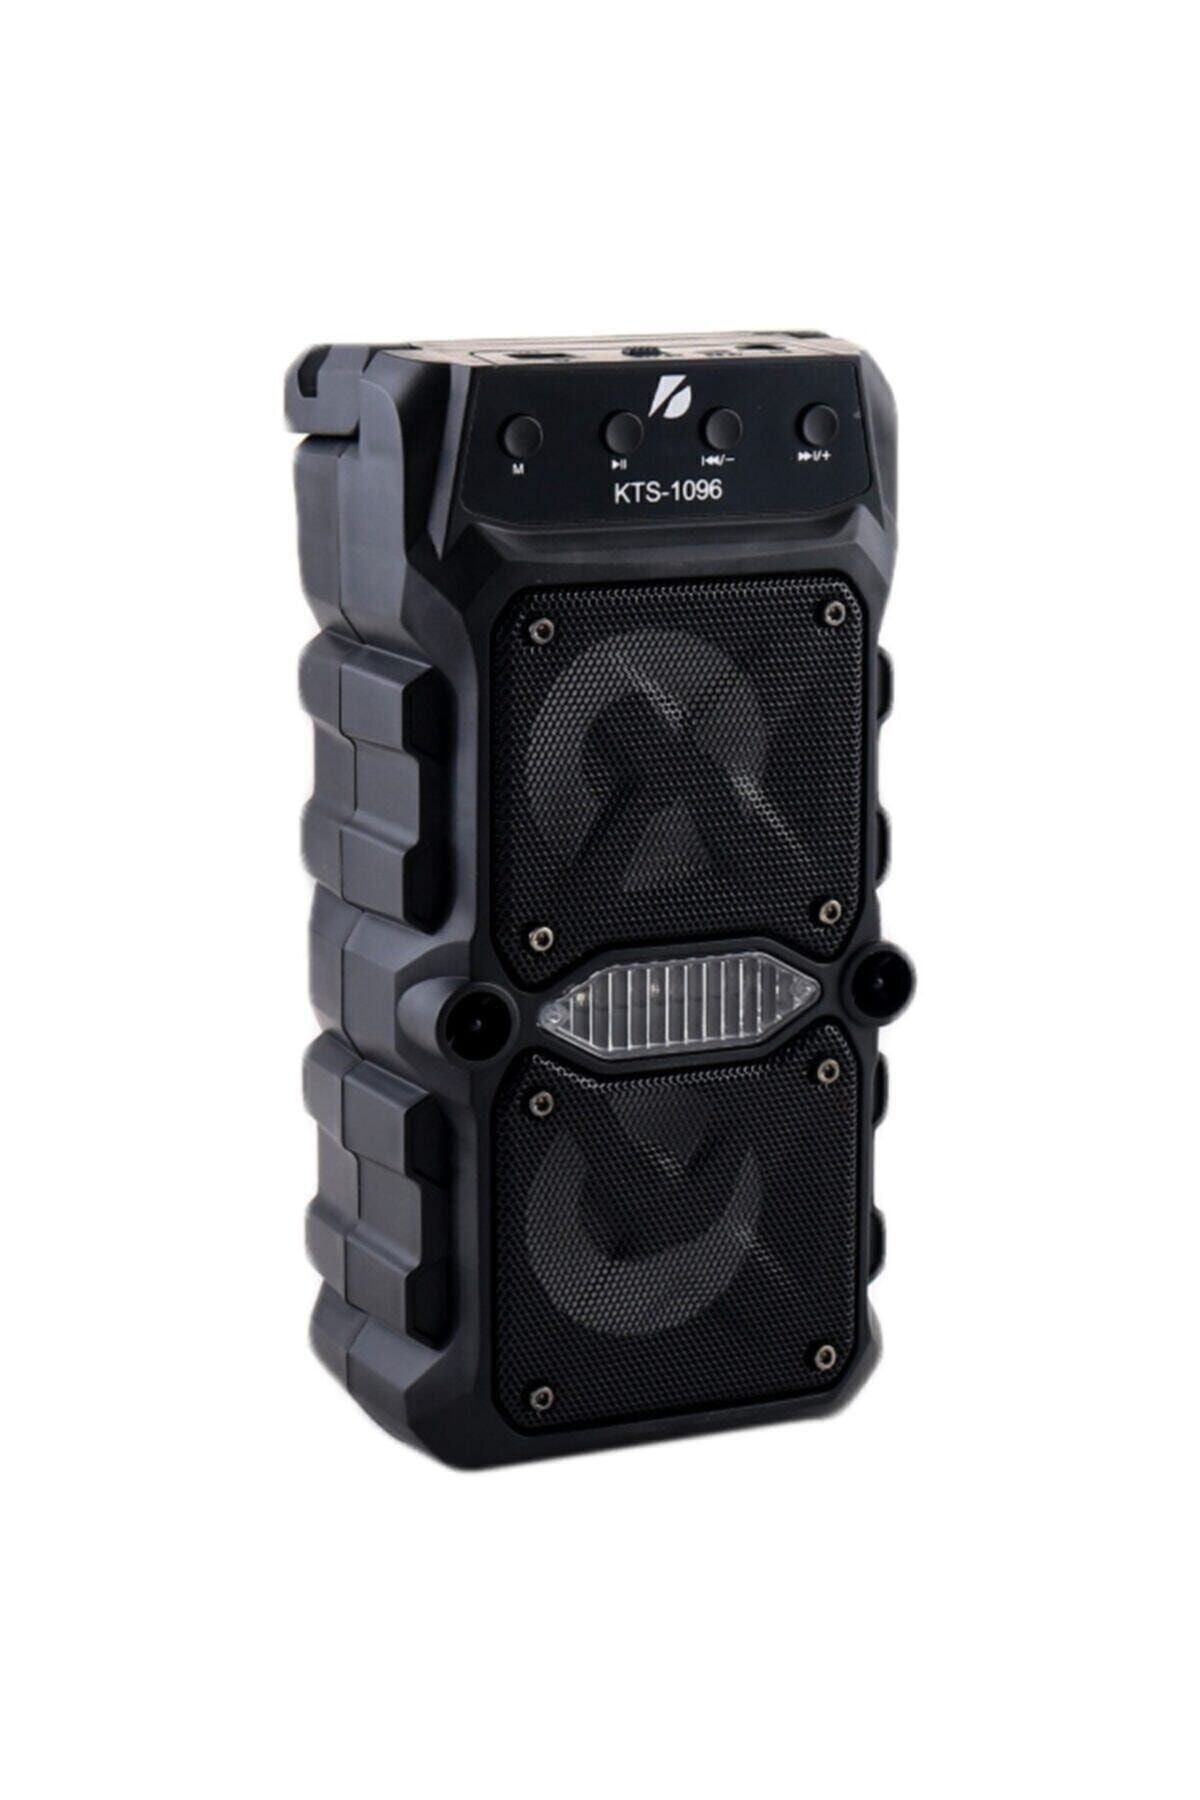 Urban Sound Bluetooth Hoparlör Kablosuz Hoparlör Speaker Ses Bombası Radyo-usb-tf Giriş kts-1096